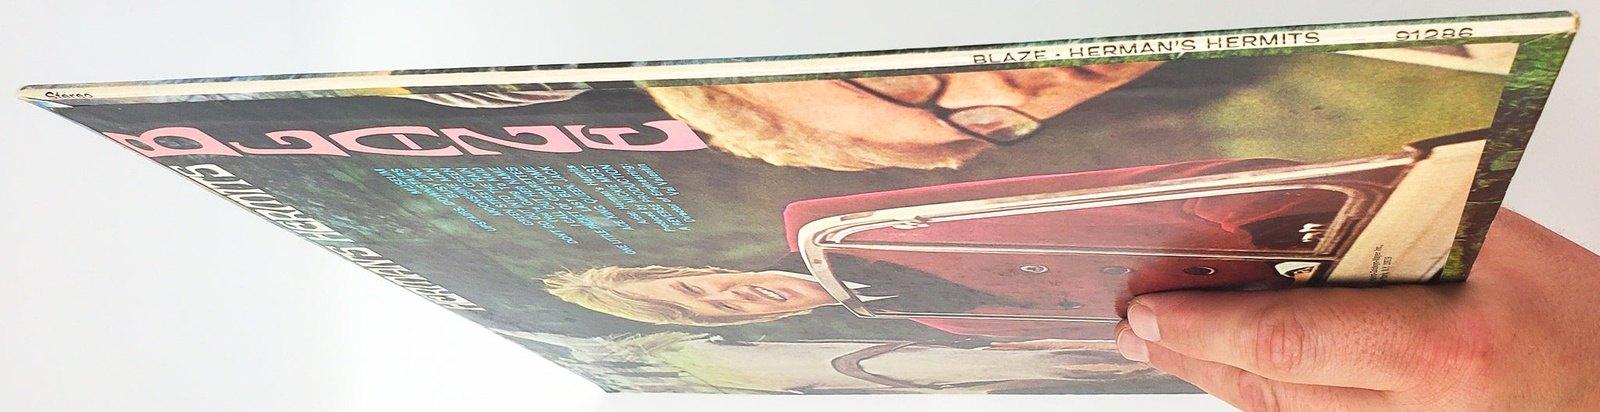 Herman's Hermits Blaze Record 33 RPM LP ST-91286 MGM 1967 5